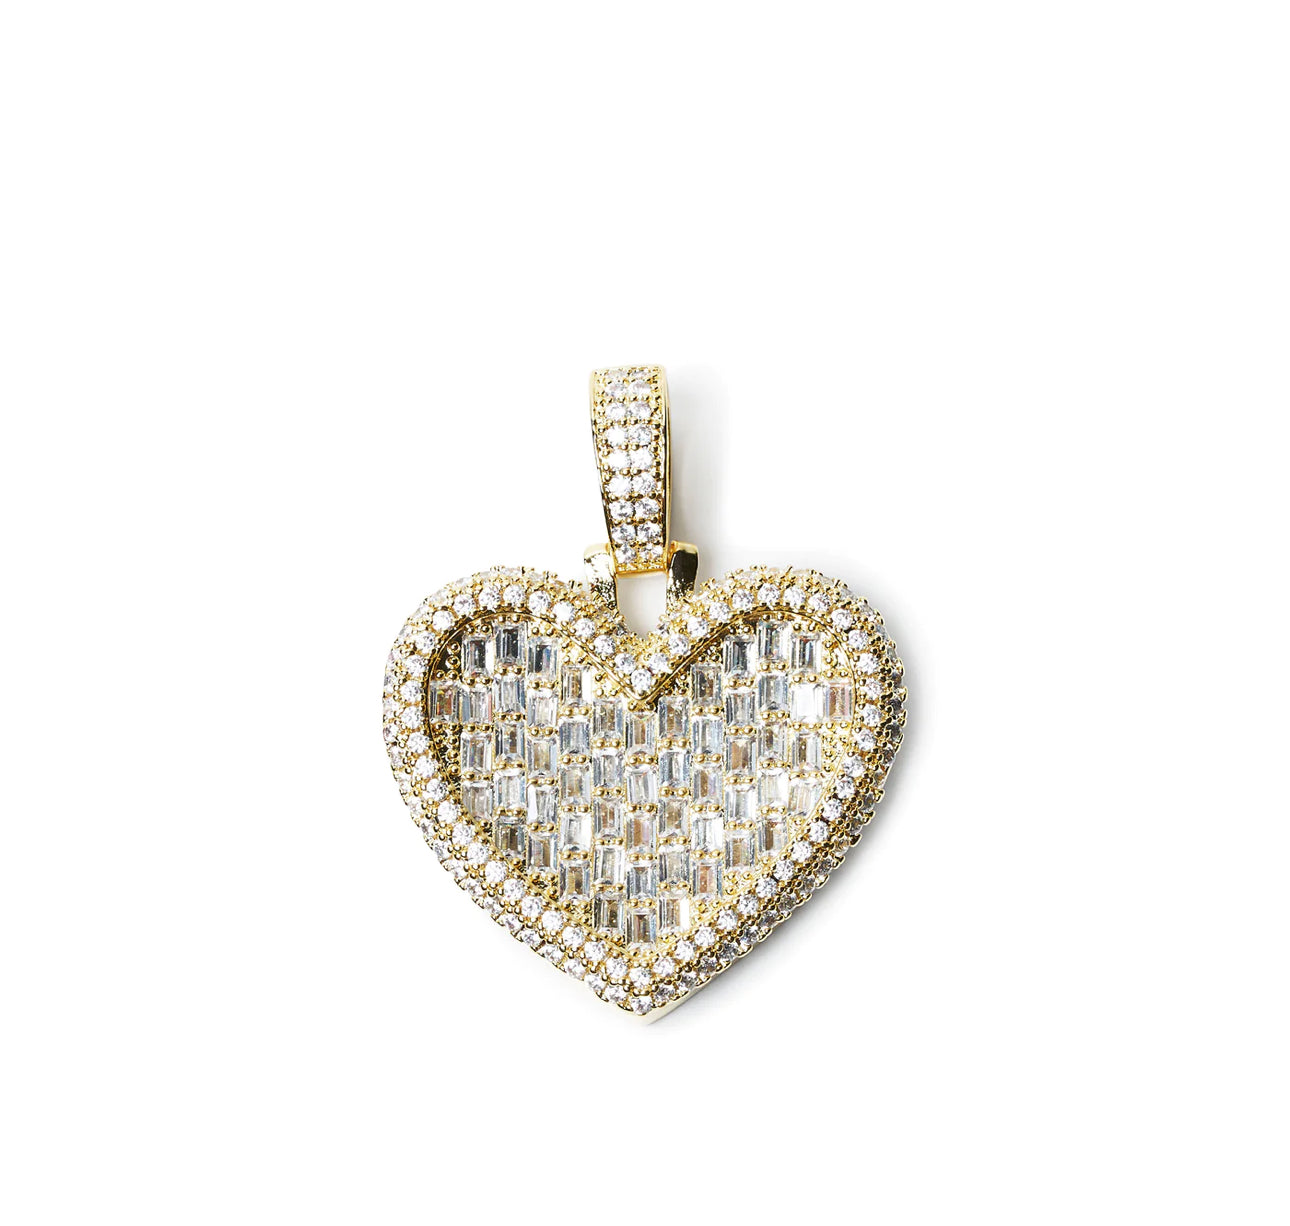 Lovely Heart Necklace